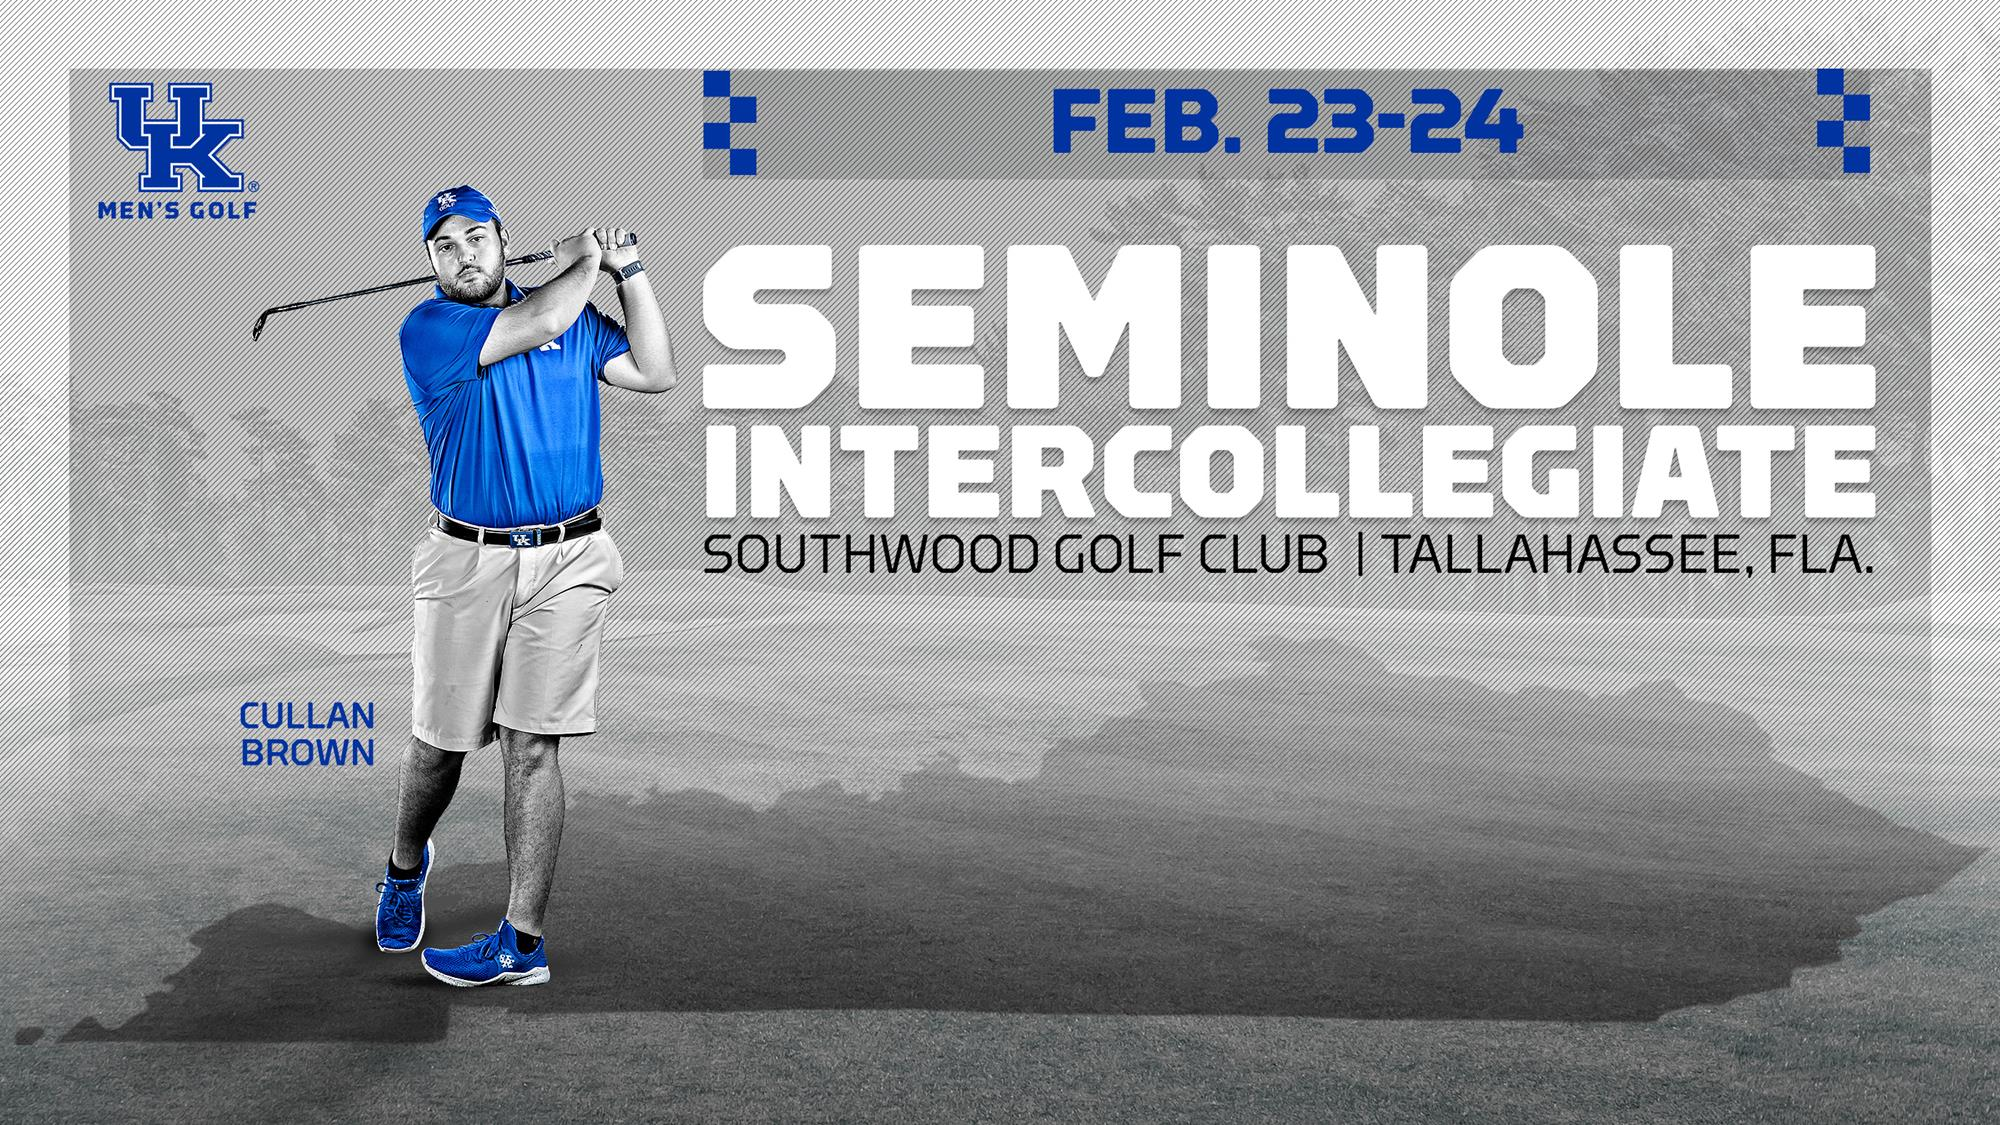 Men’s Golf Begins Spring Season at Seminole Intercollegiate